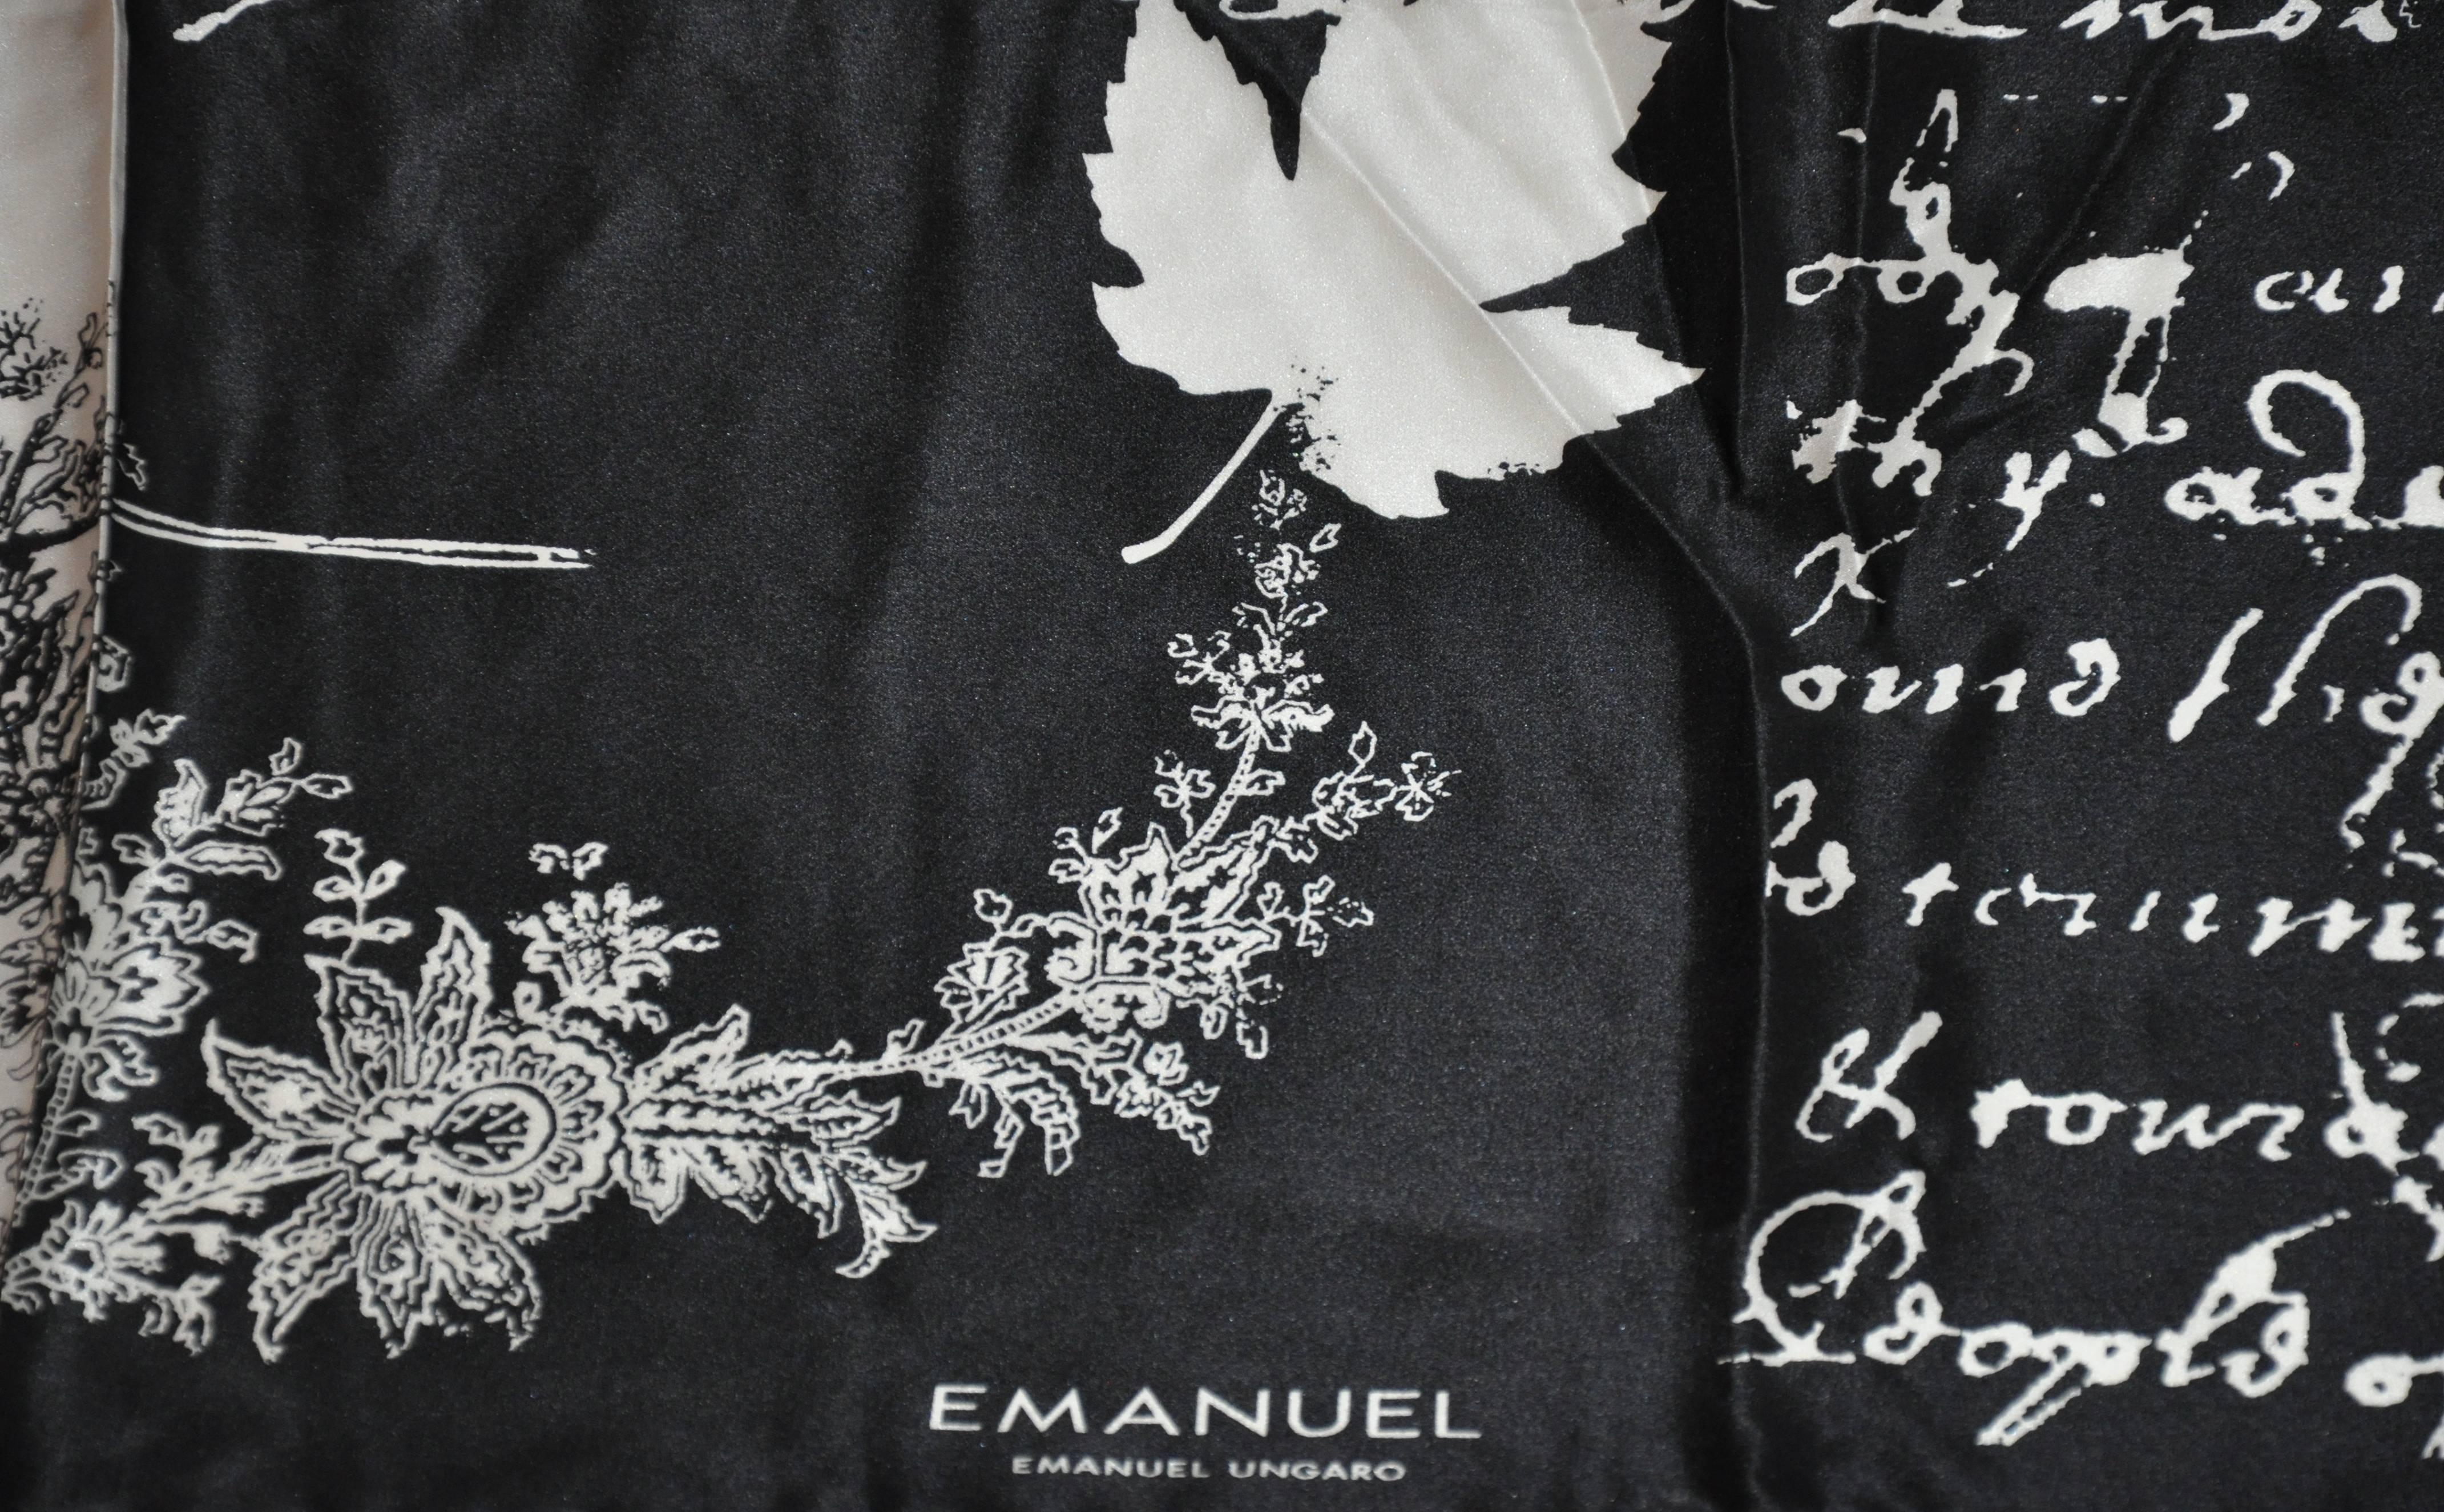 Emanuel Ungaro Black & White silk scarf of writings 2